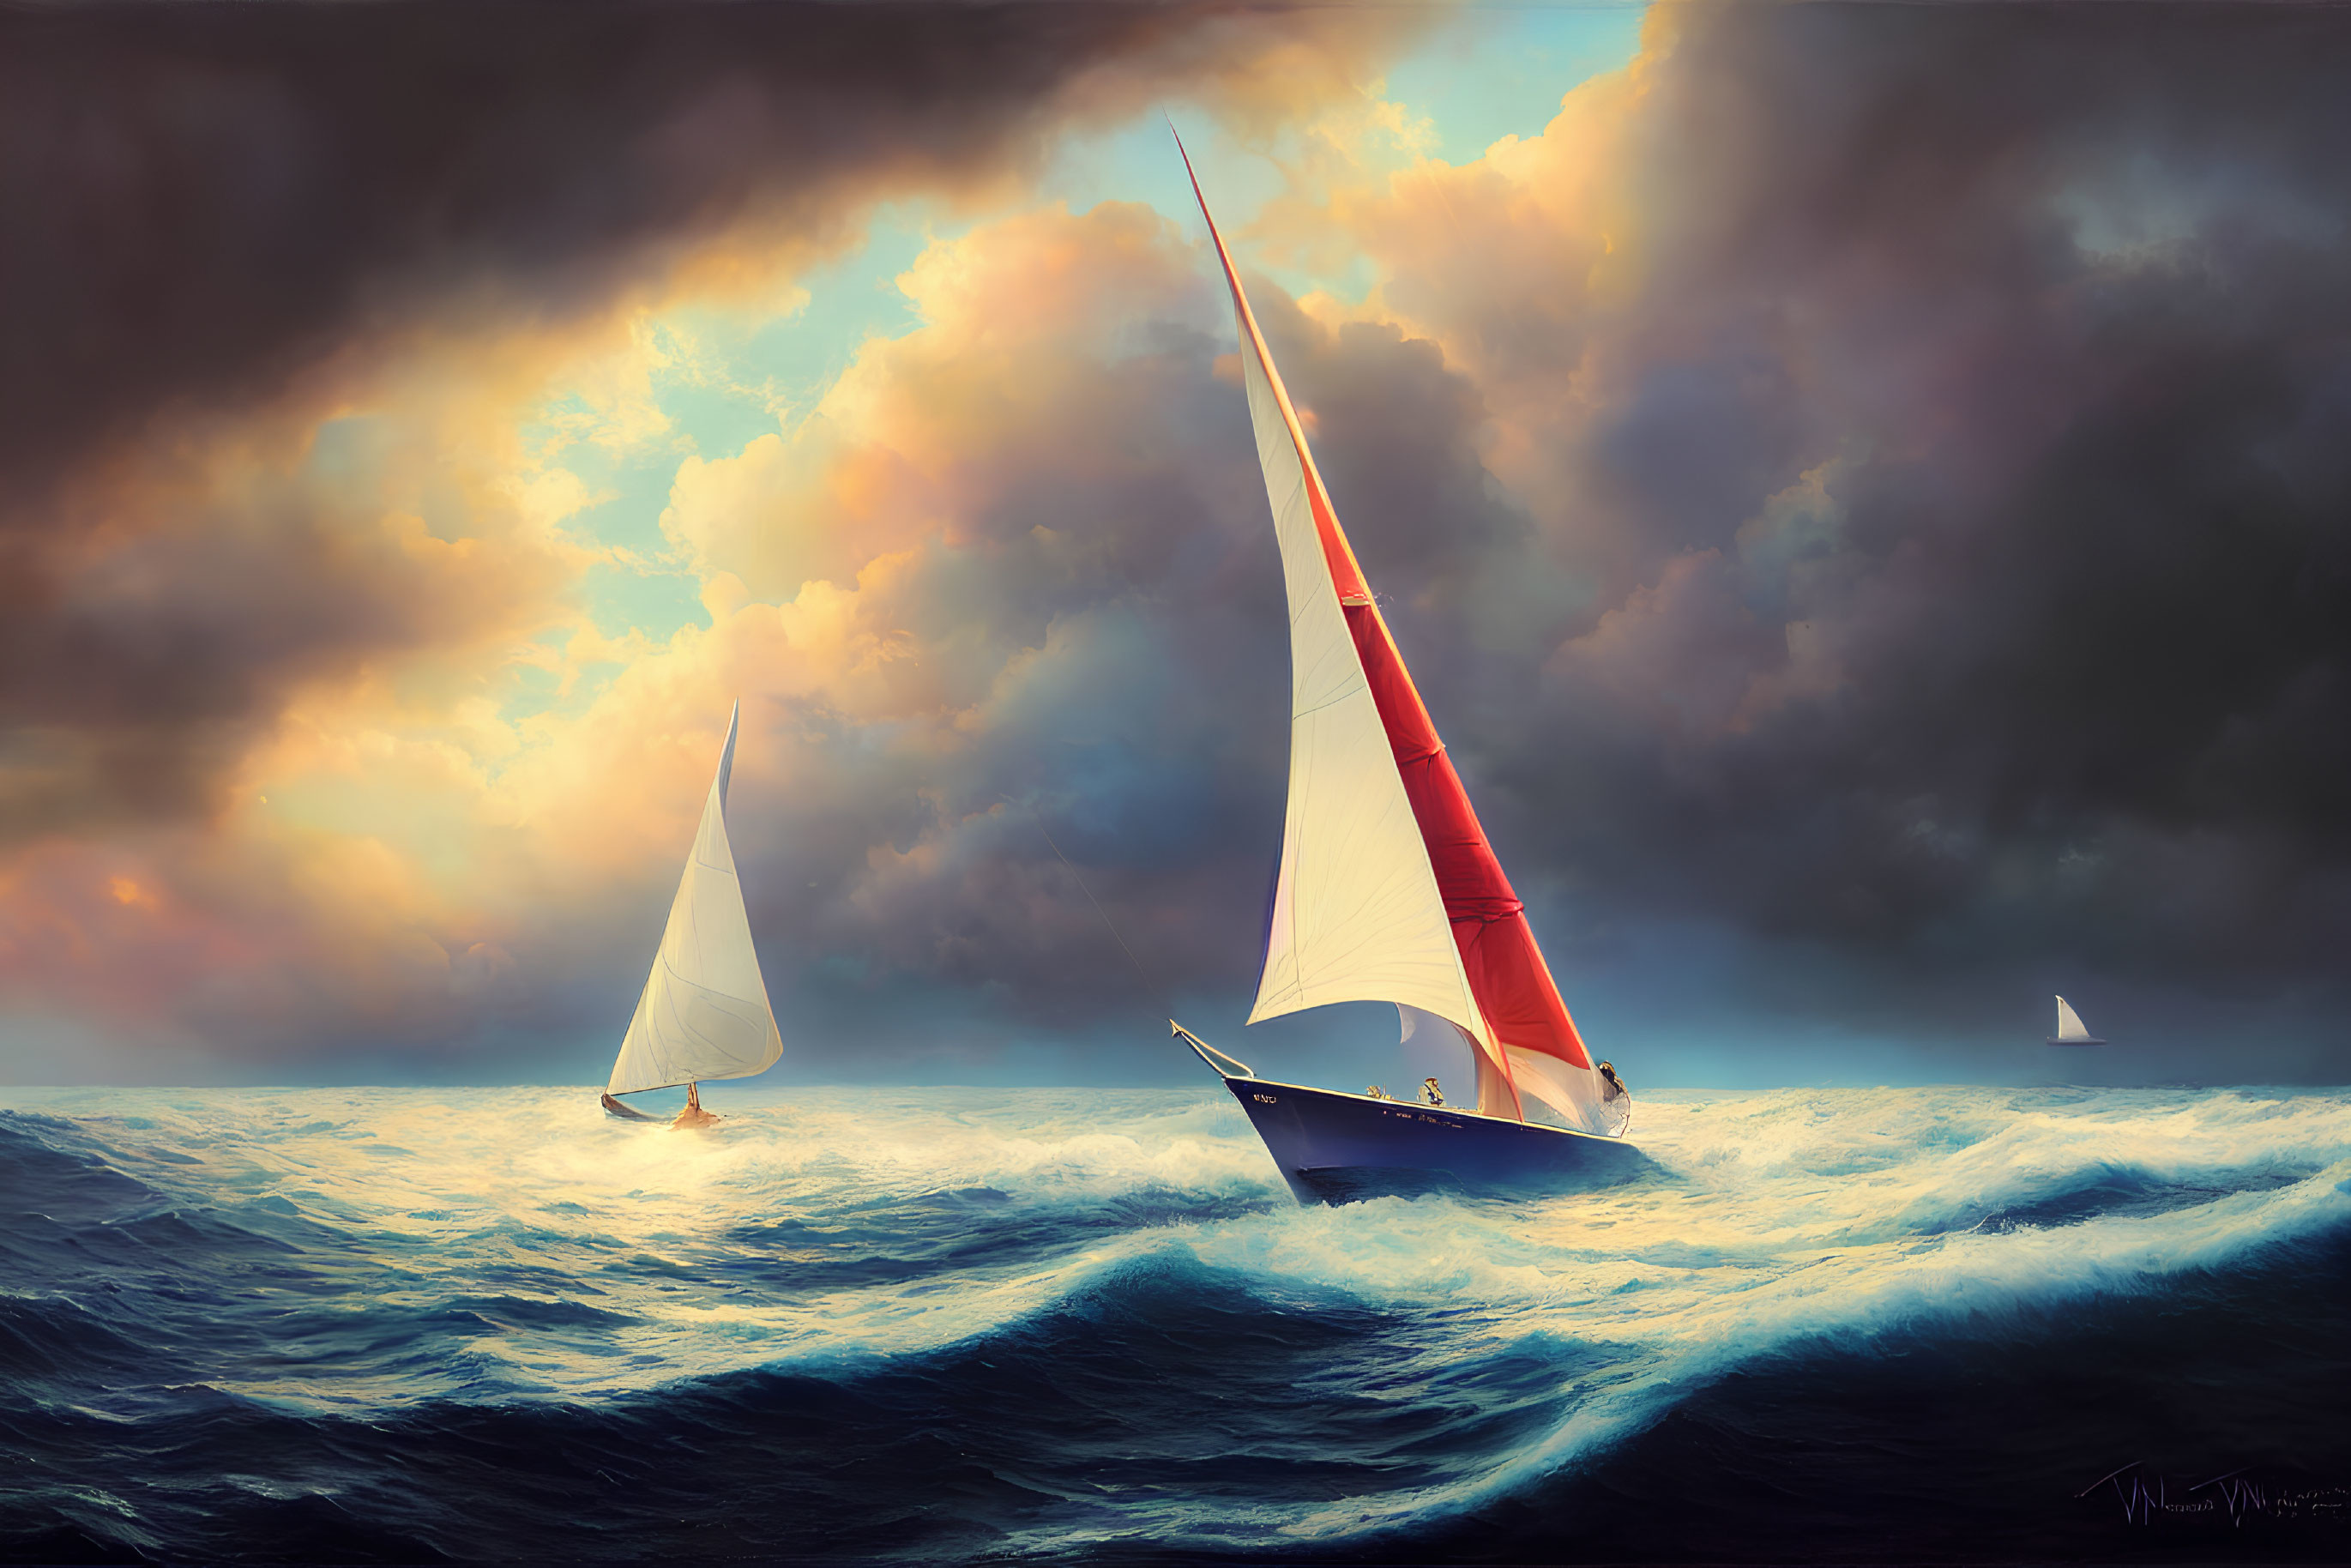 Sailboats on Turbulent Sea Under Dramatic Sunlit Sky